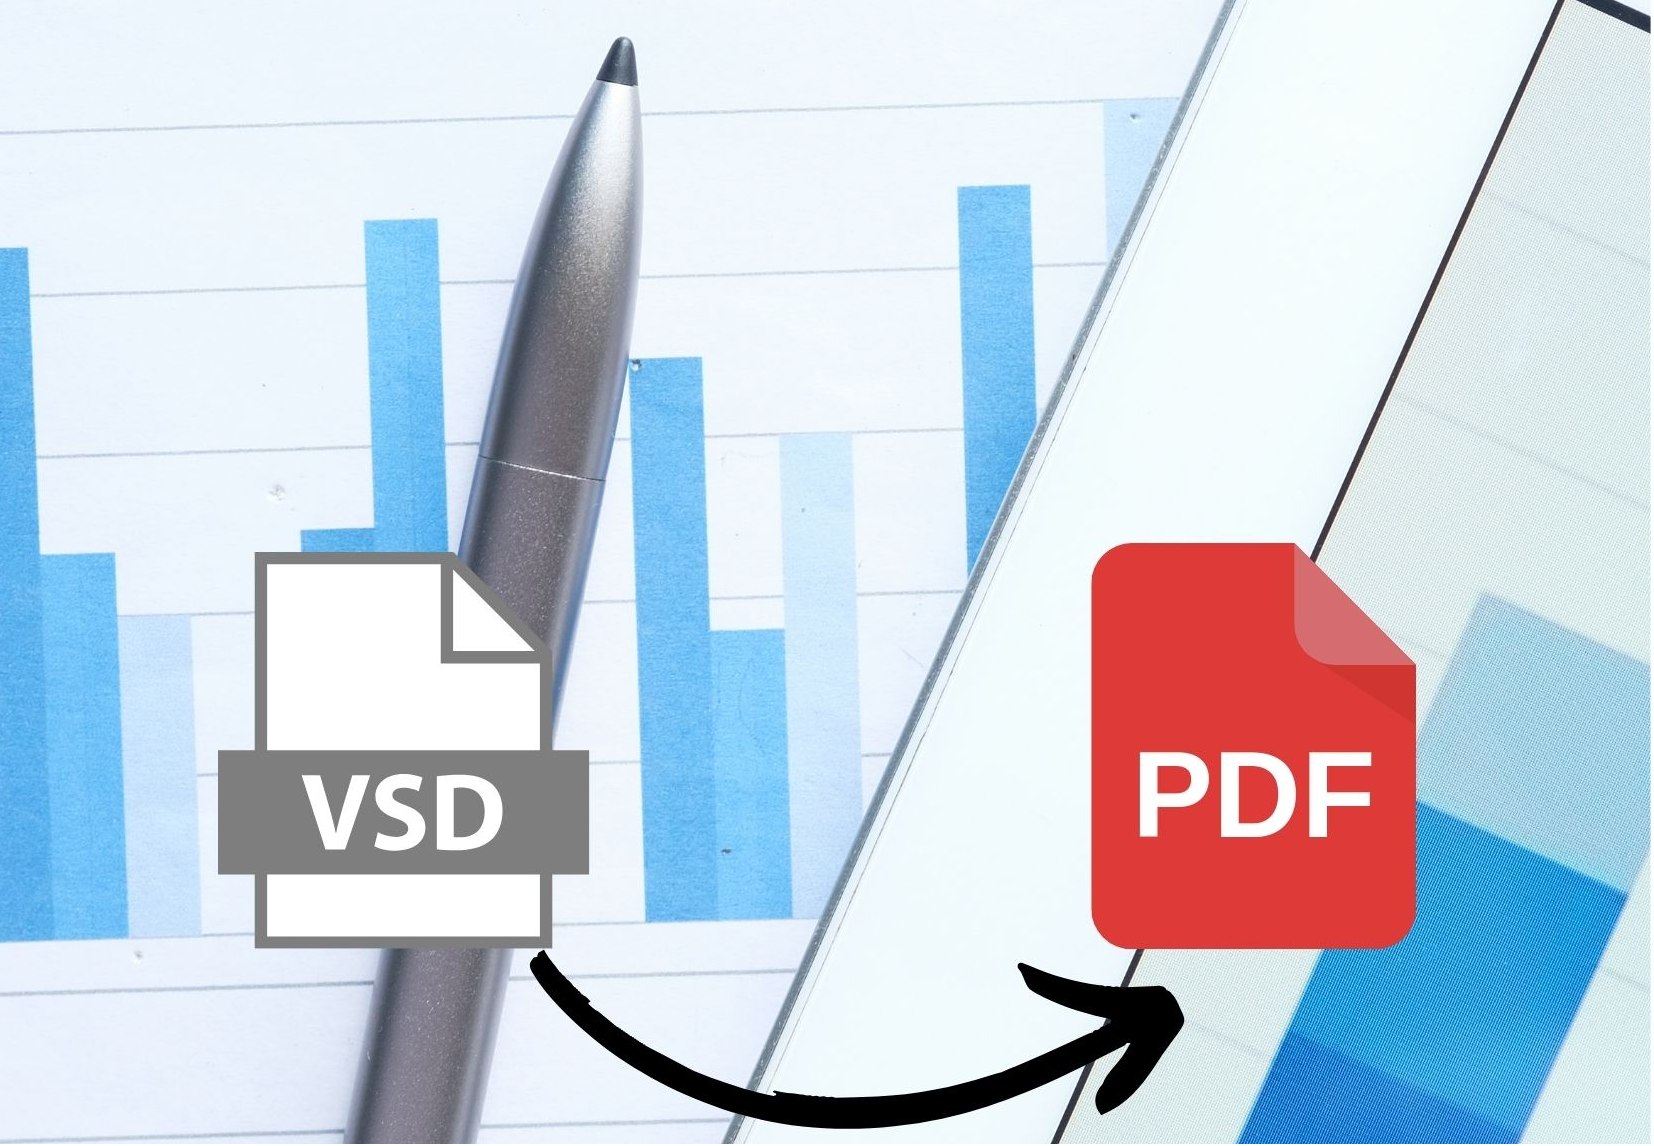 vsd and pdf logo on top of diagram